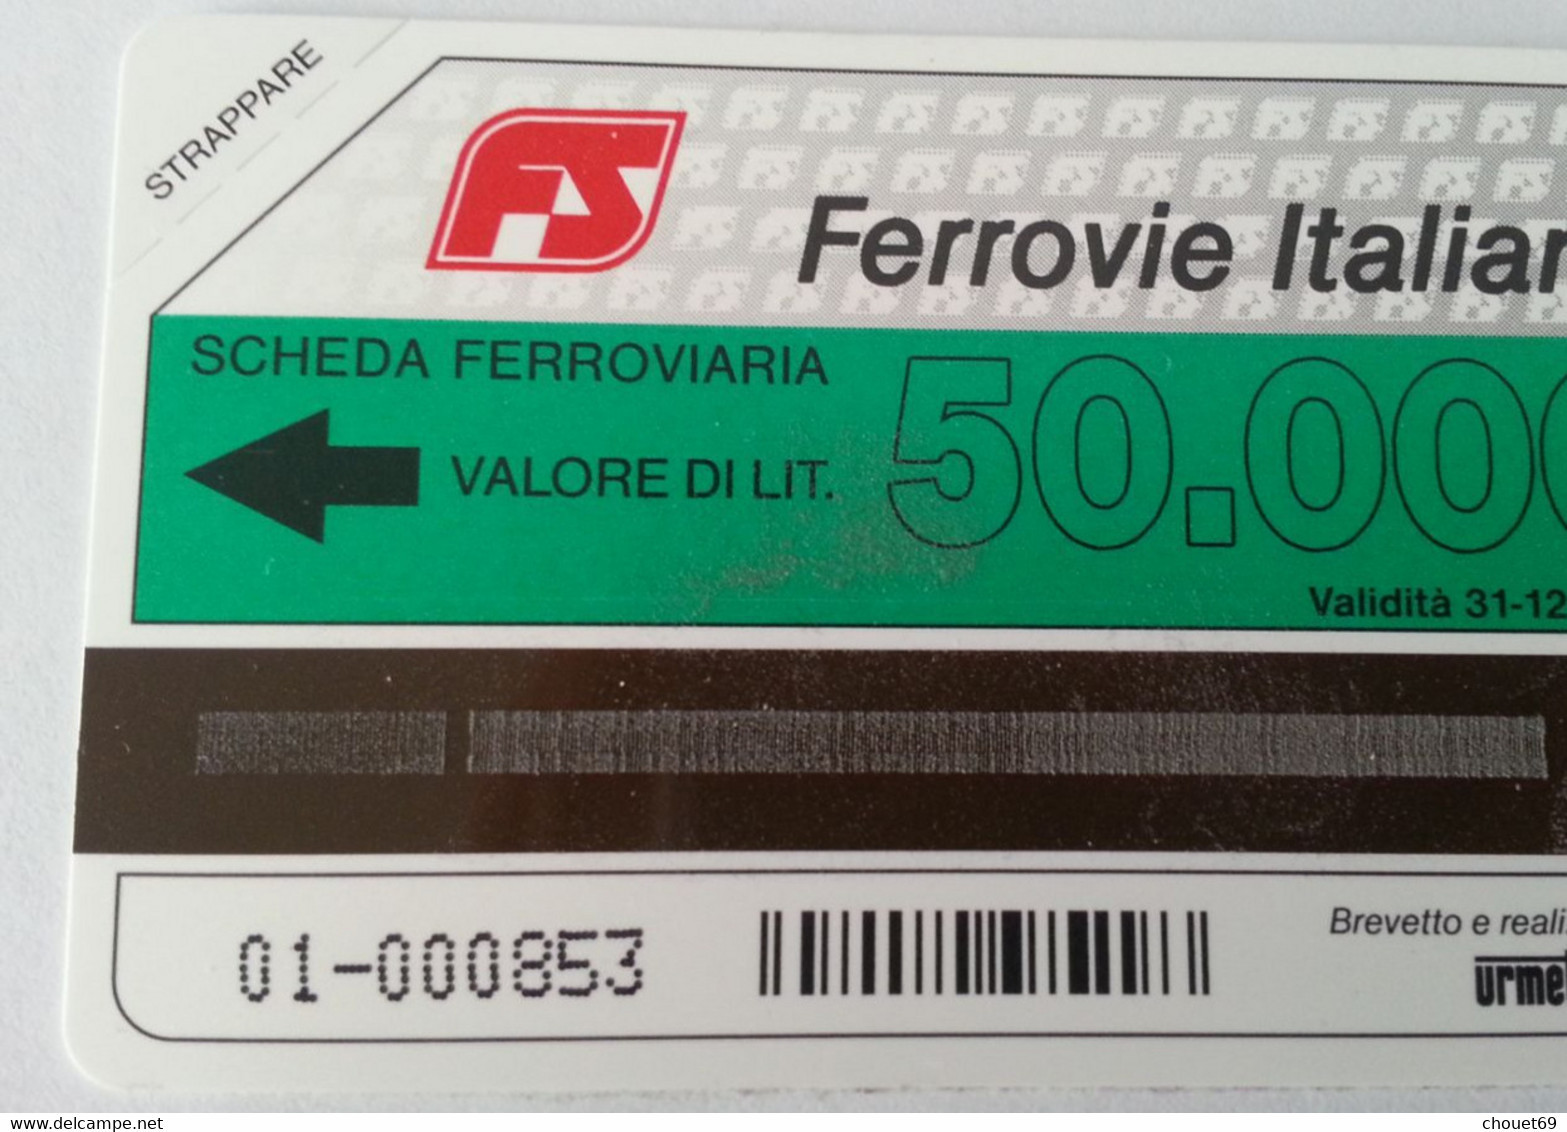 FS Ferrovie Italiane Scheda Ferroviaria In Train 50000 Urmet NEUVE MINT Ferrovie (D0415 - Usi Speciali